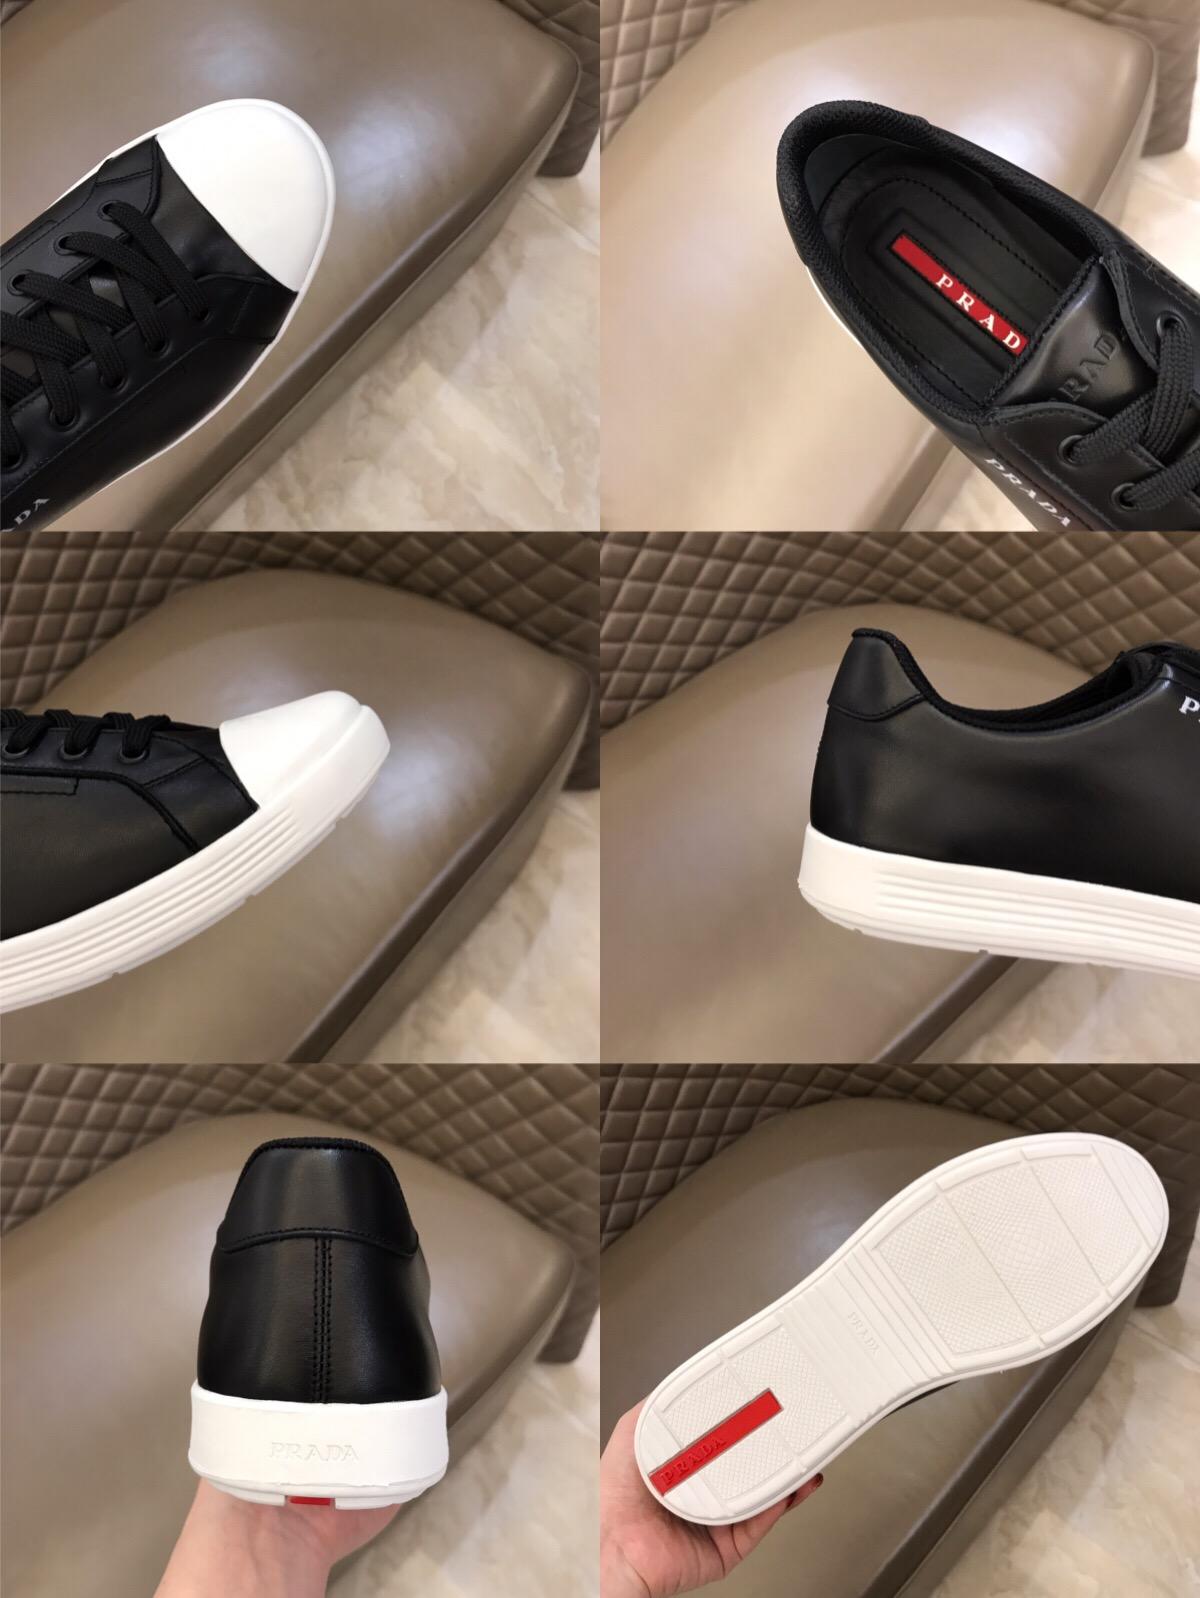 Prada Fashion Sneakers Black and white Prada print with white sole MS02938